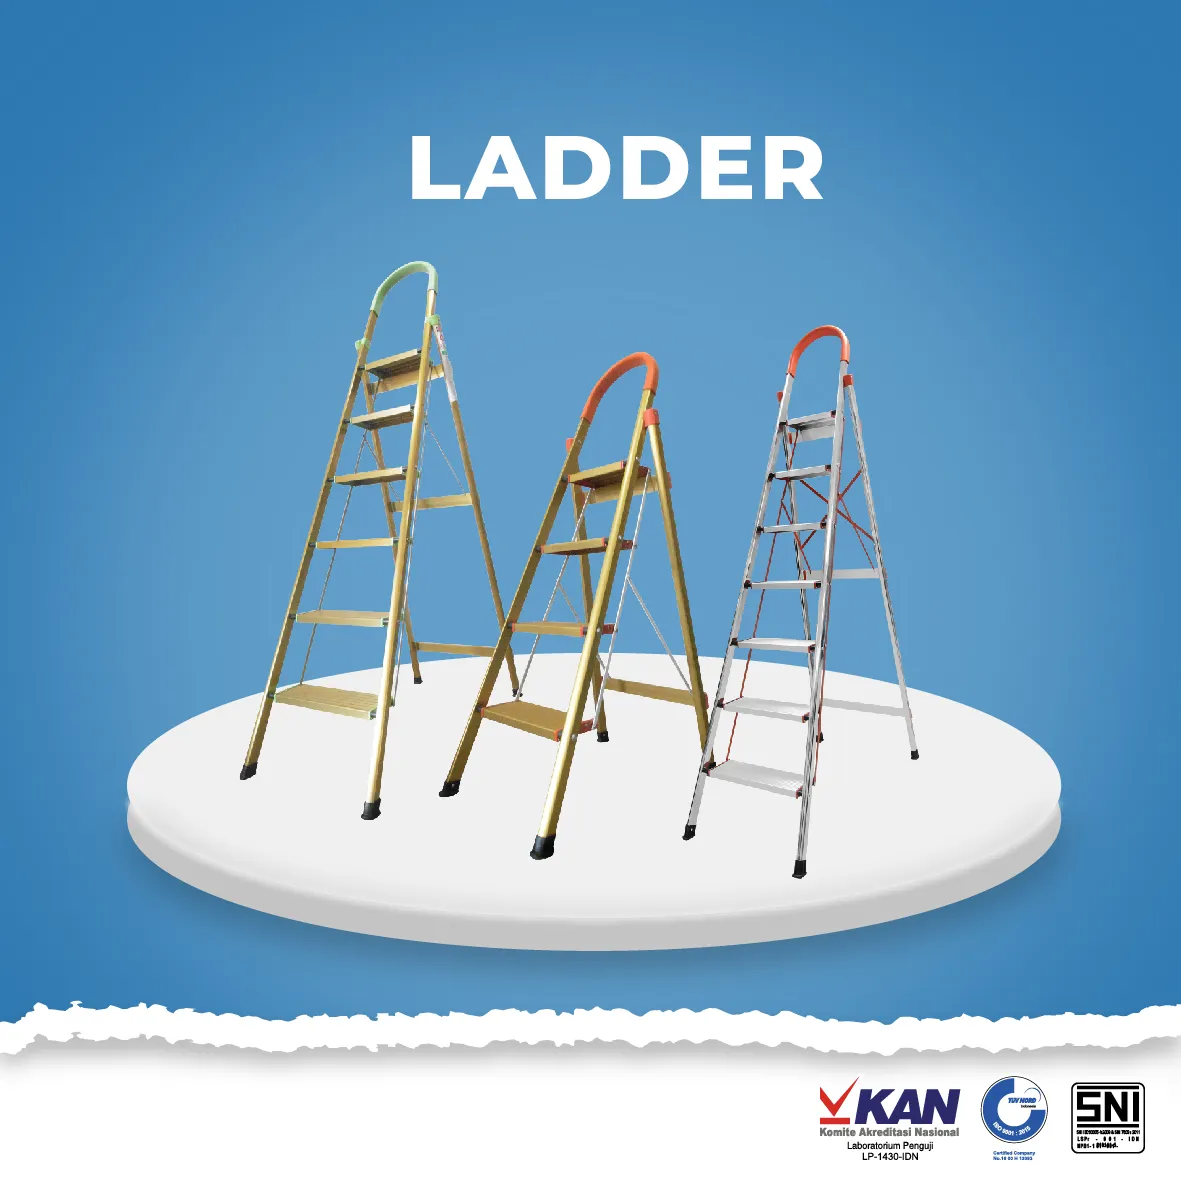  Ladder non fan template cover website 01